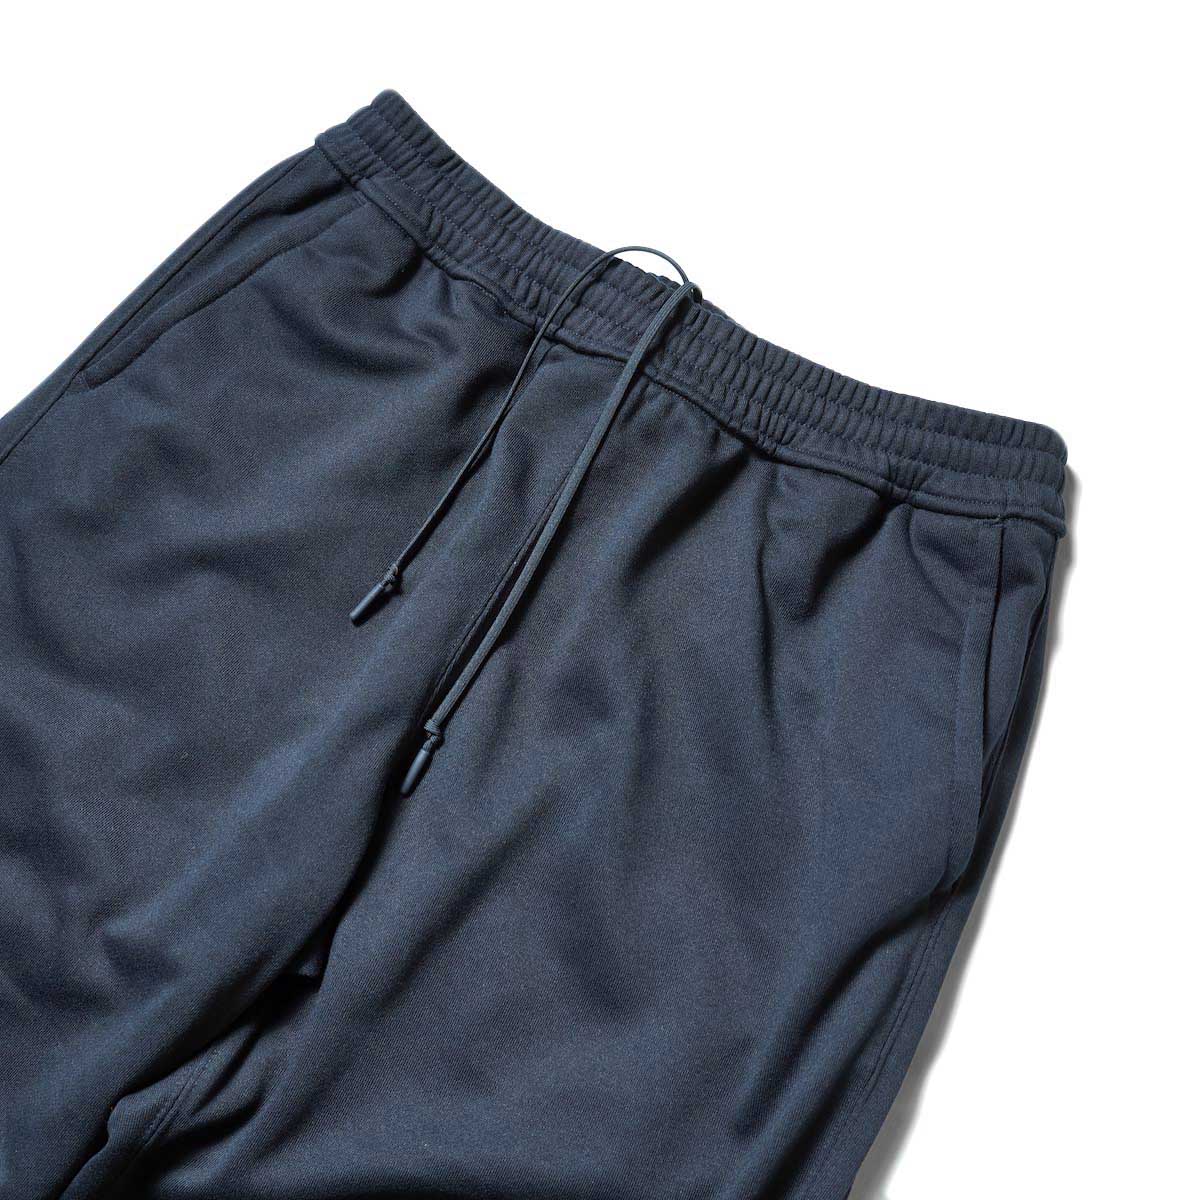 DAIWA PIER39 / Tech Sweat Pants (Dark Navy)ウエスト